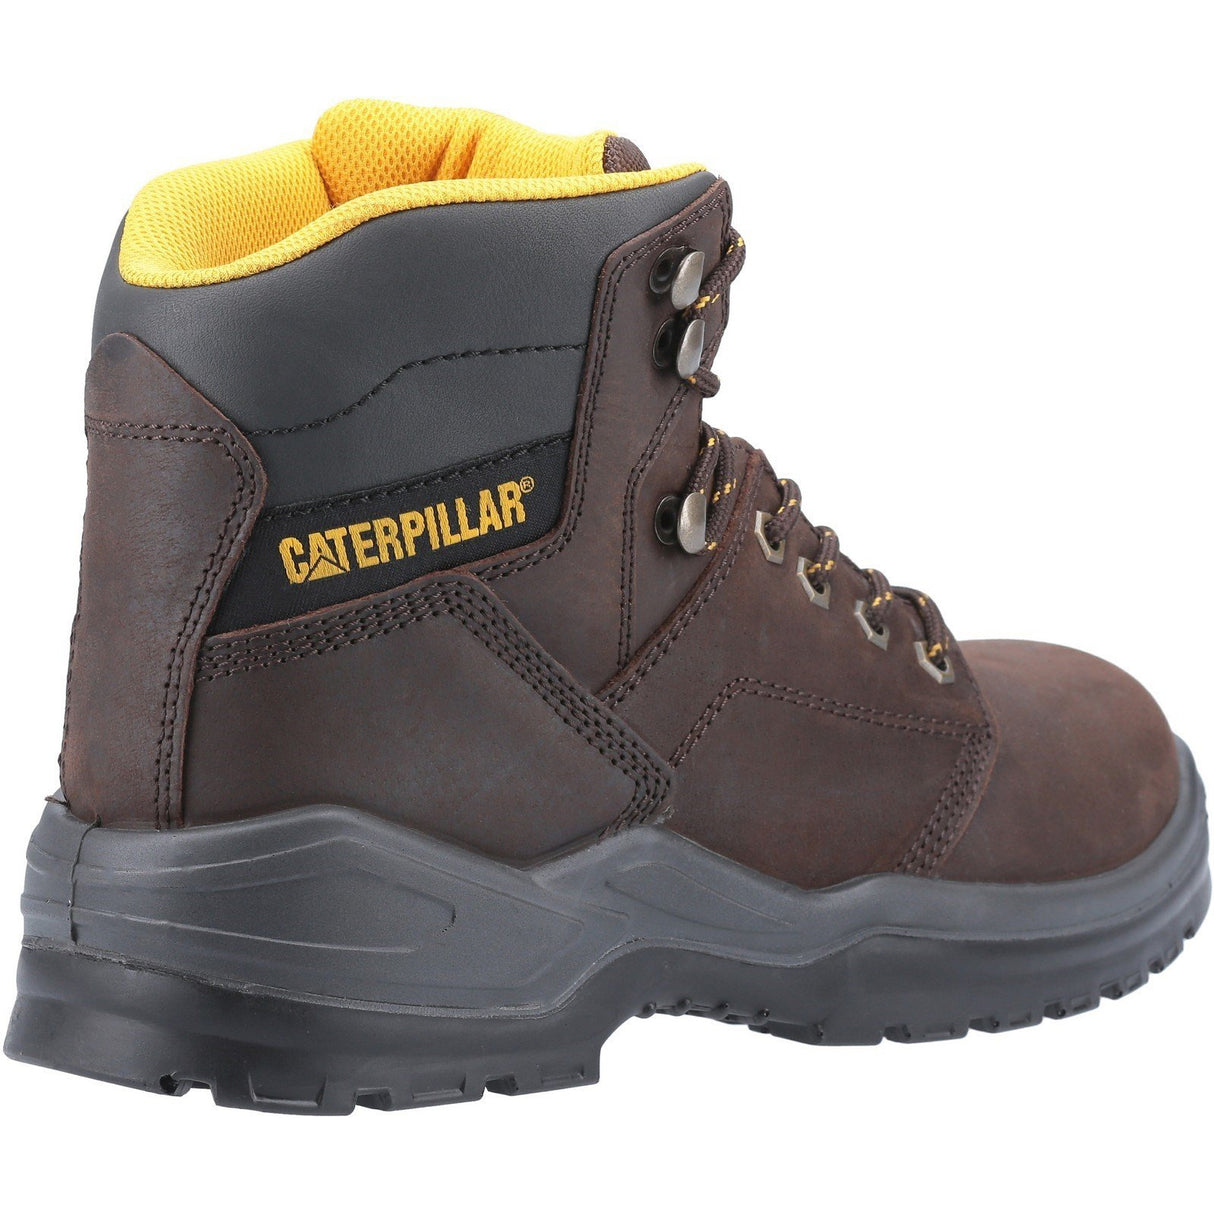 Caterpillar Striver Safety Boots